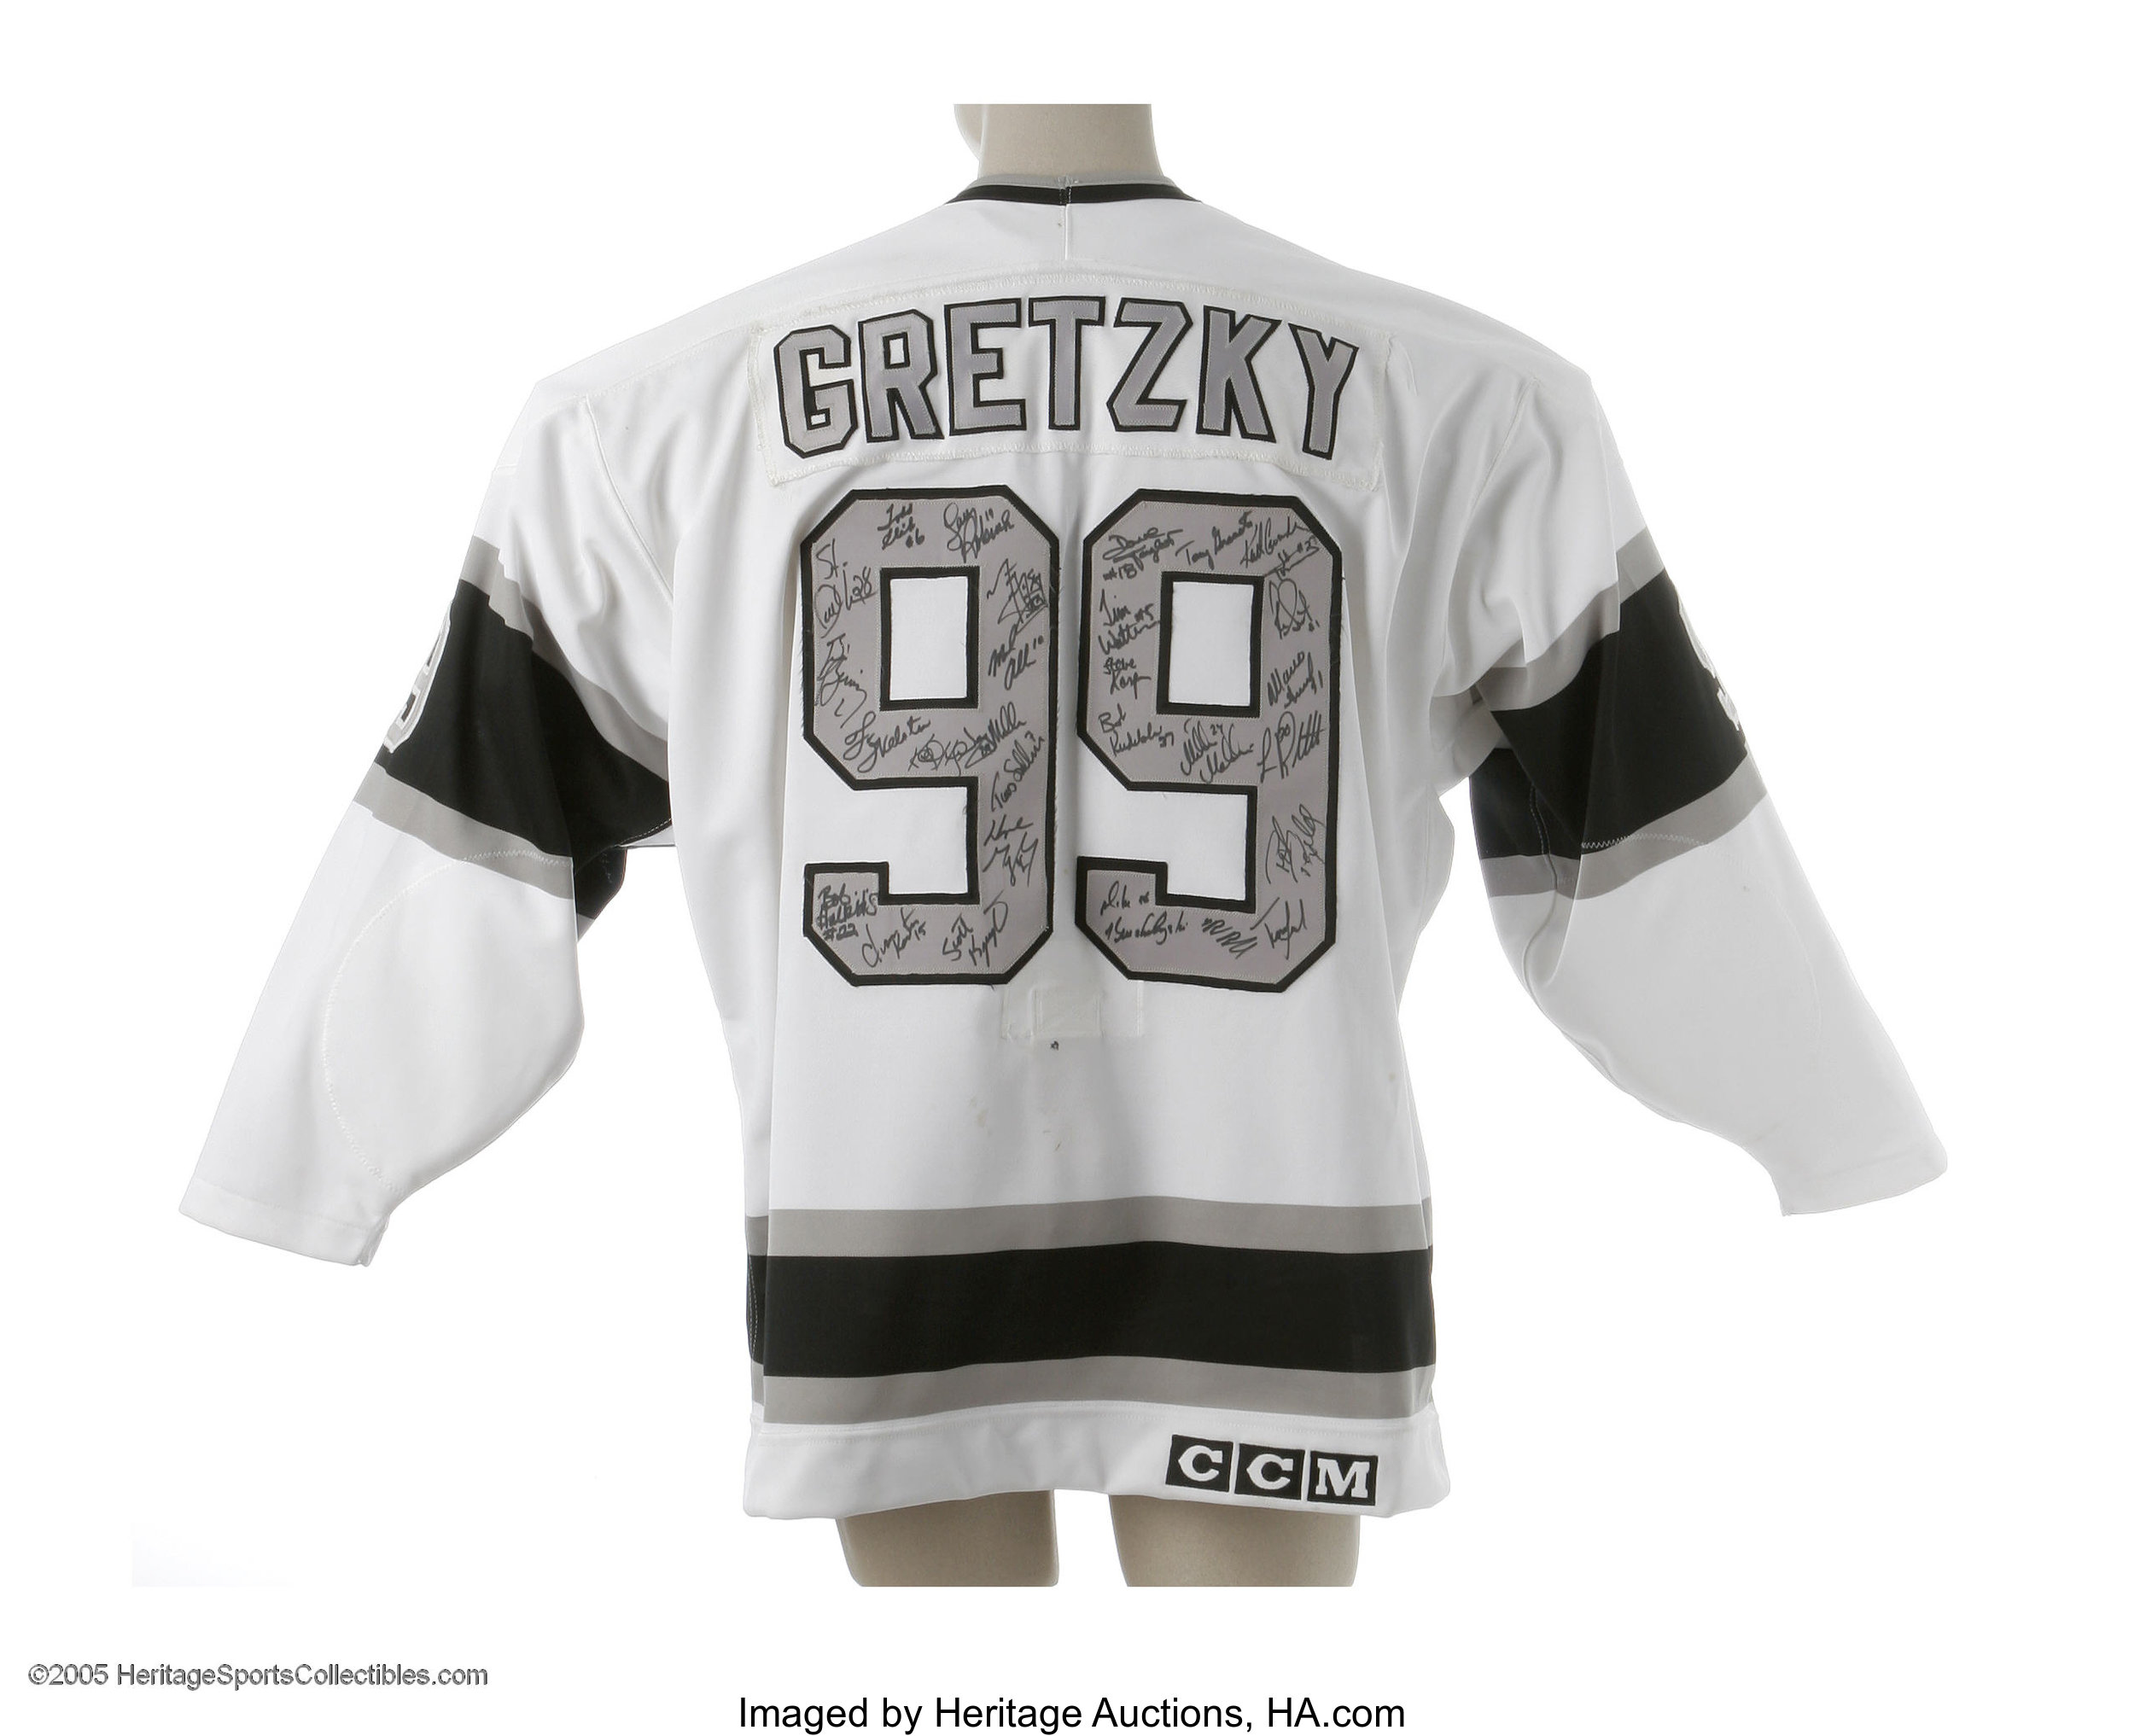 Los Angeles Kings Signed Wayne Gretzky Hockey Jersey. High-quality